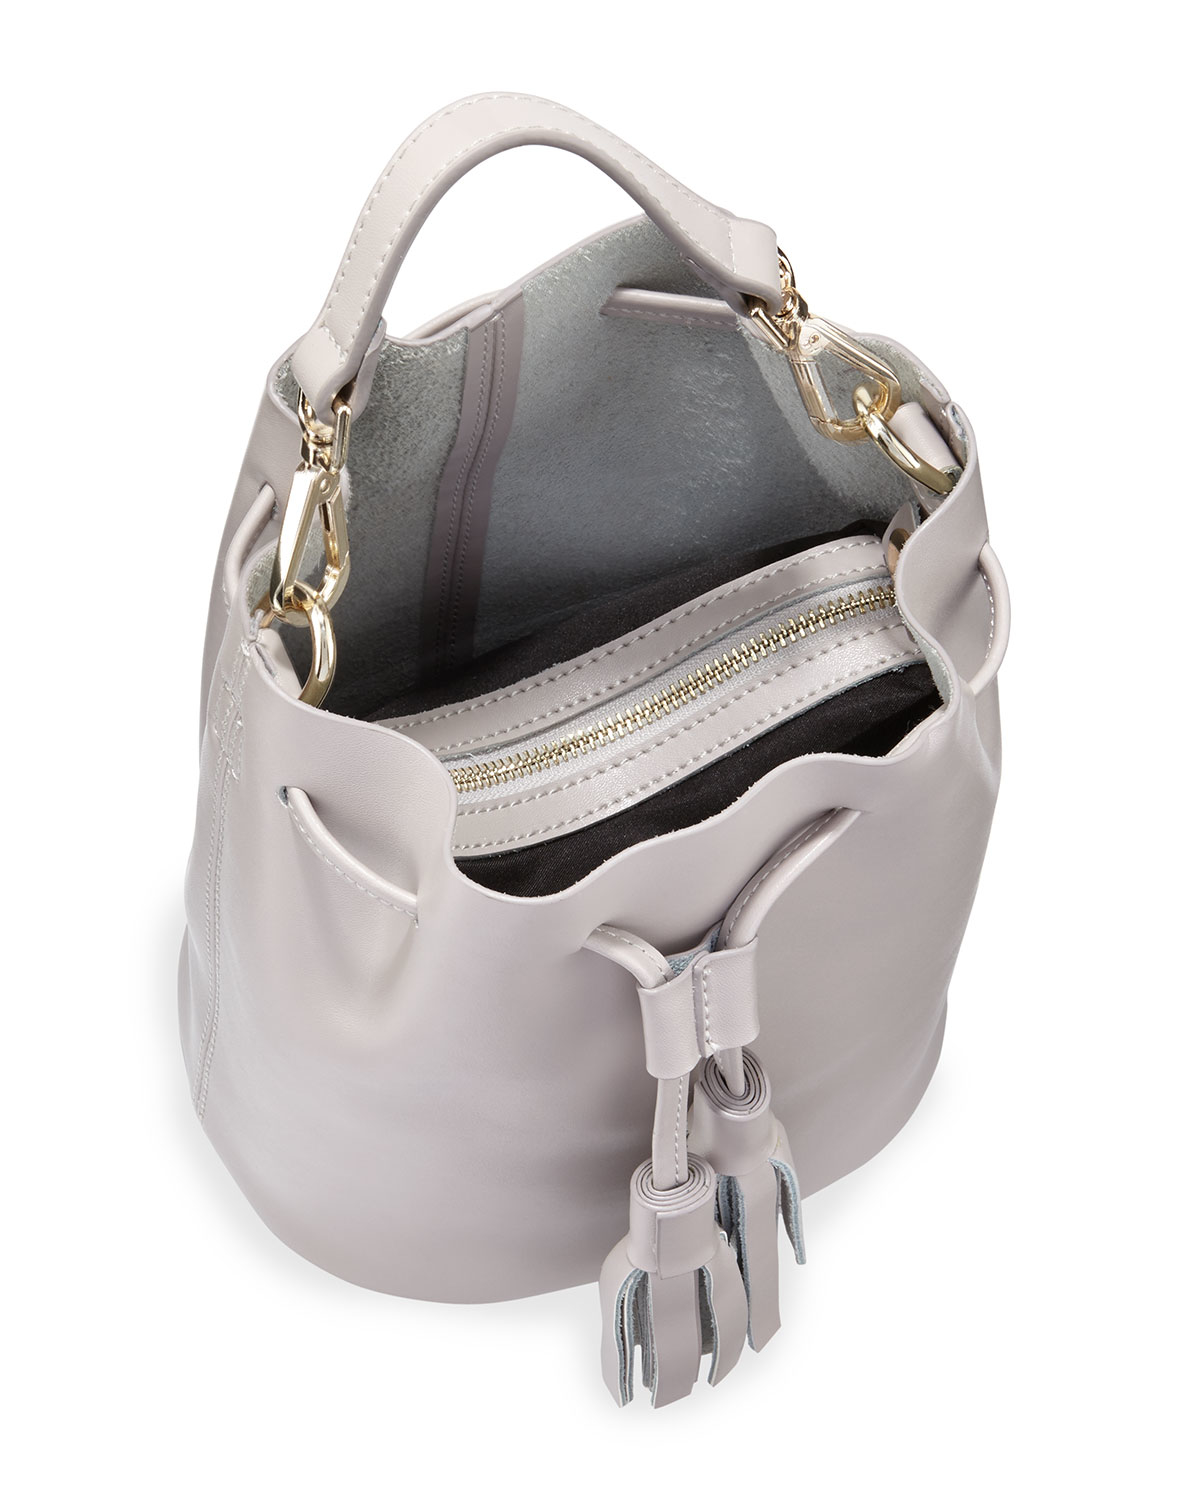 Lyst - Neiman Marcus Tyler Small Leather Tassel Bucket Bag in Gray